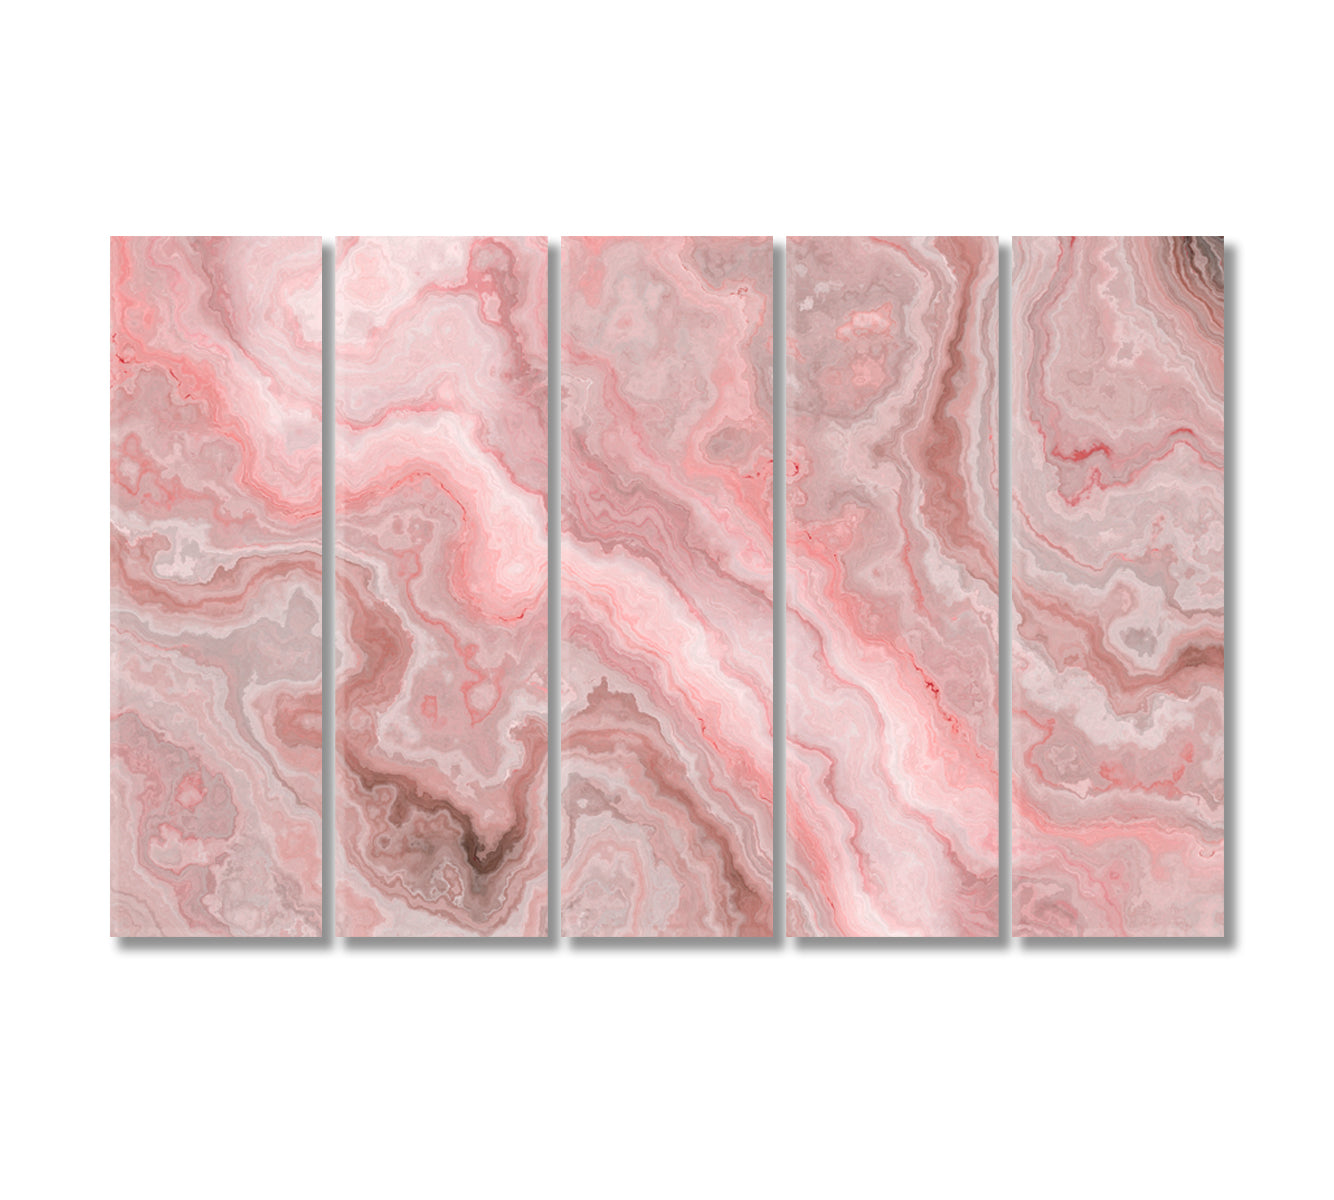 Abstract Pink Onyx Canvas Print-Artwork-CetArt-5 Panels-36x24 inches-CetArt